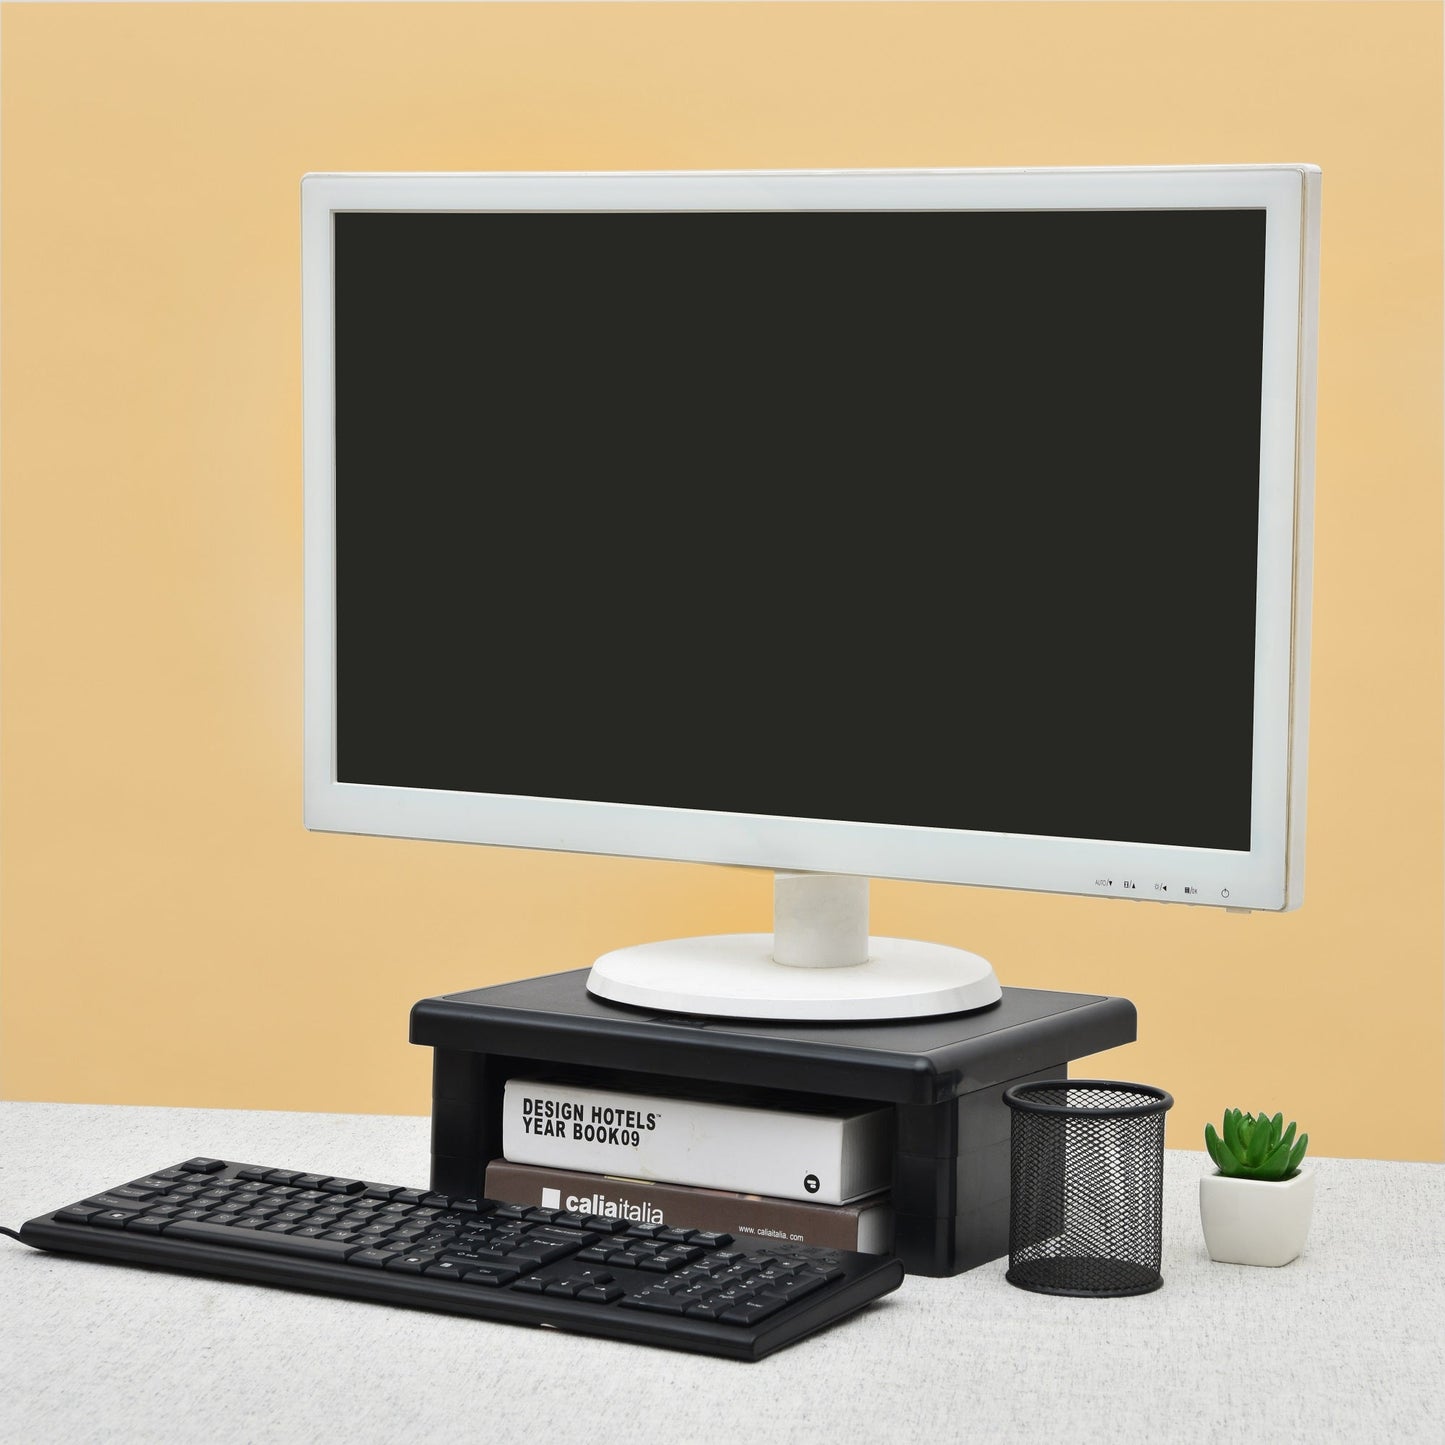 DAC® Stax MP-107 Ergonomic Height-Adjustable Monitor Riser/Laptop Stand, Black